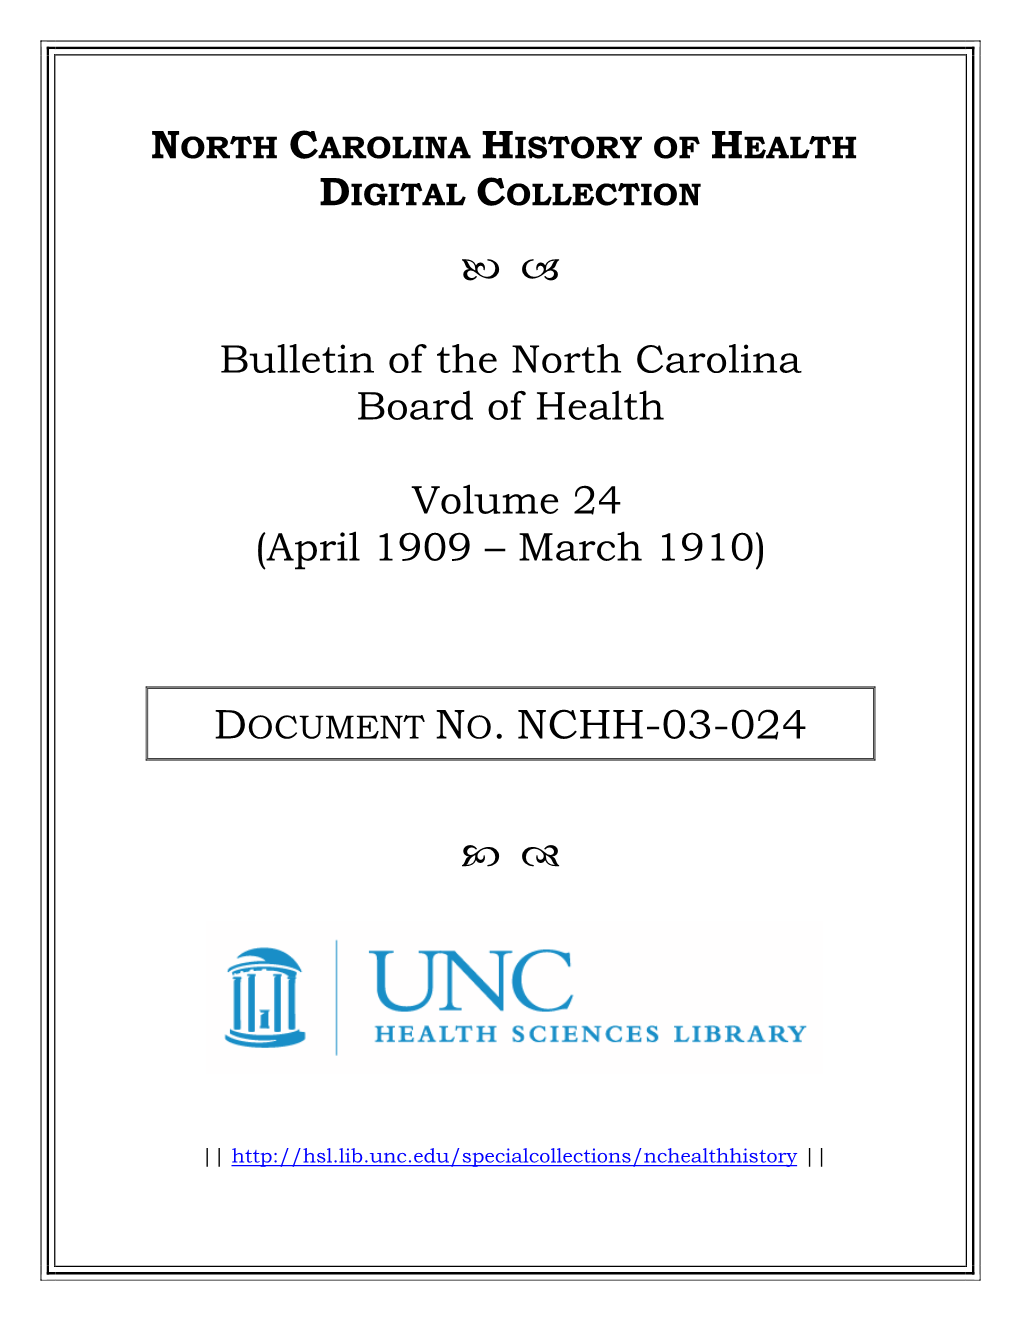 Bulletin of the North Carolina Board of Health [Vol. 24, 1909-1910]